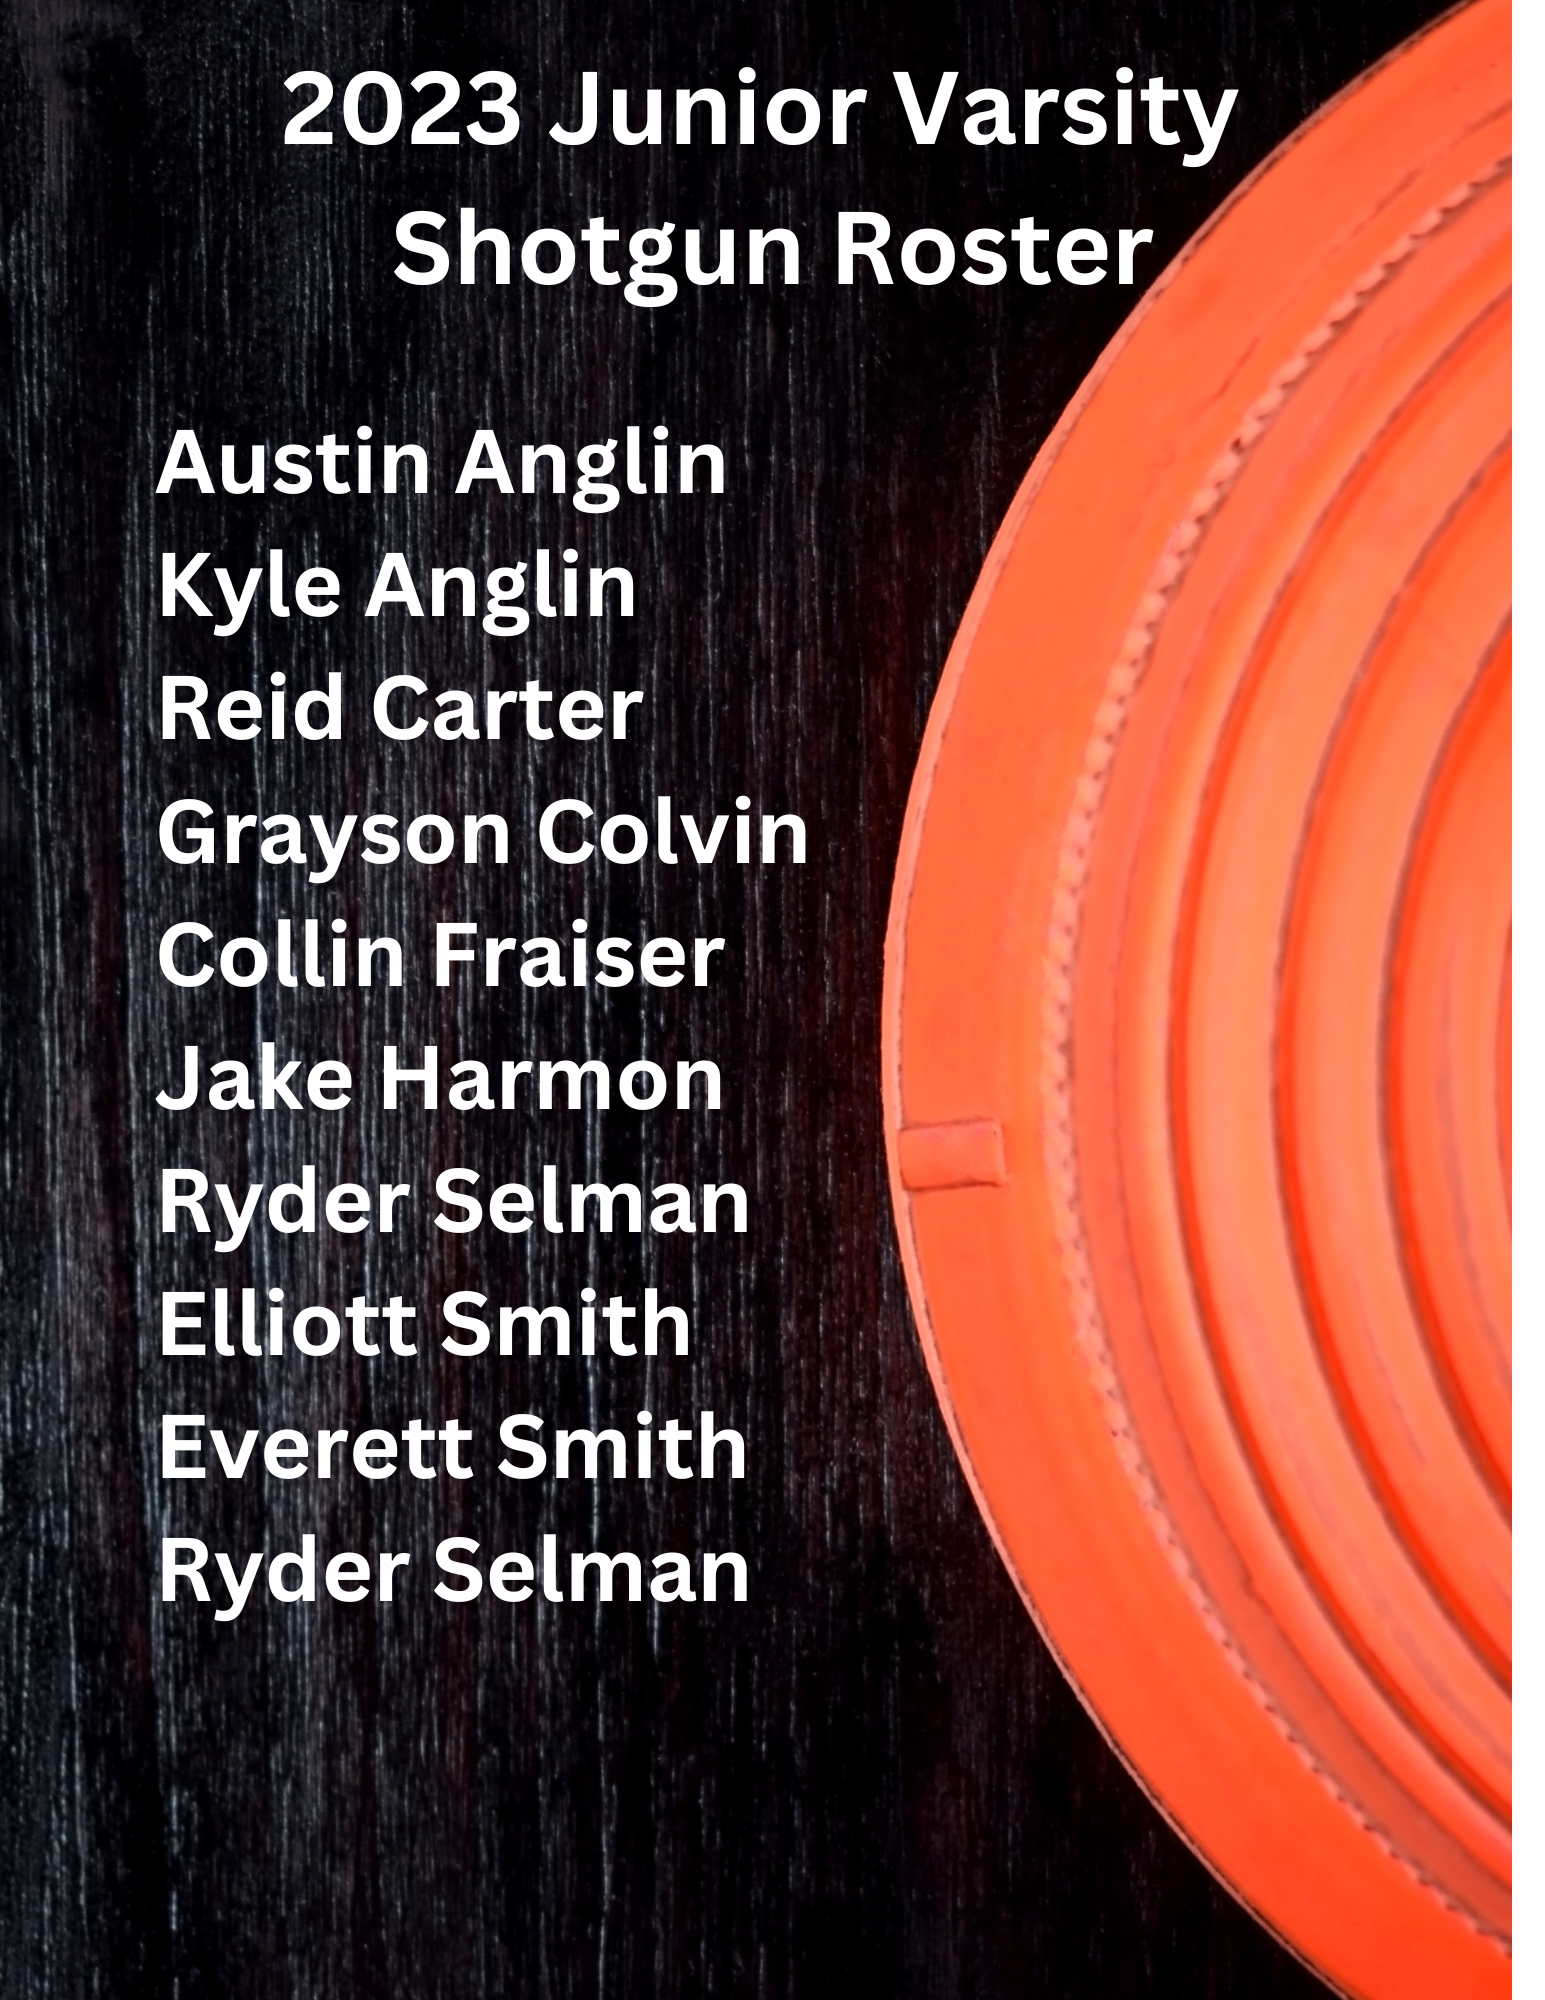 Junior Varsity shotgun roster